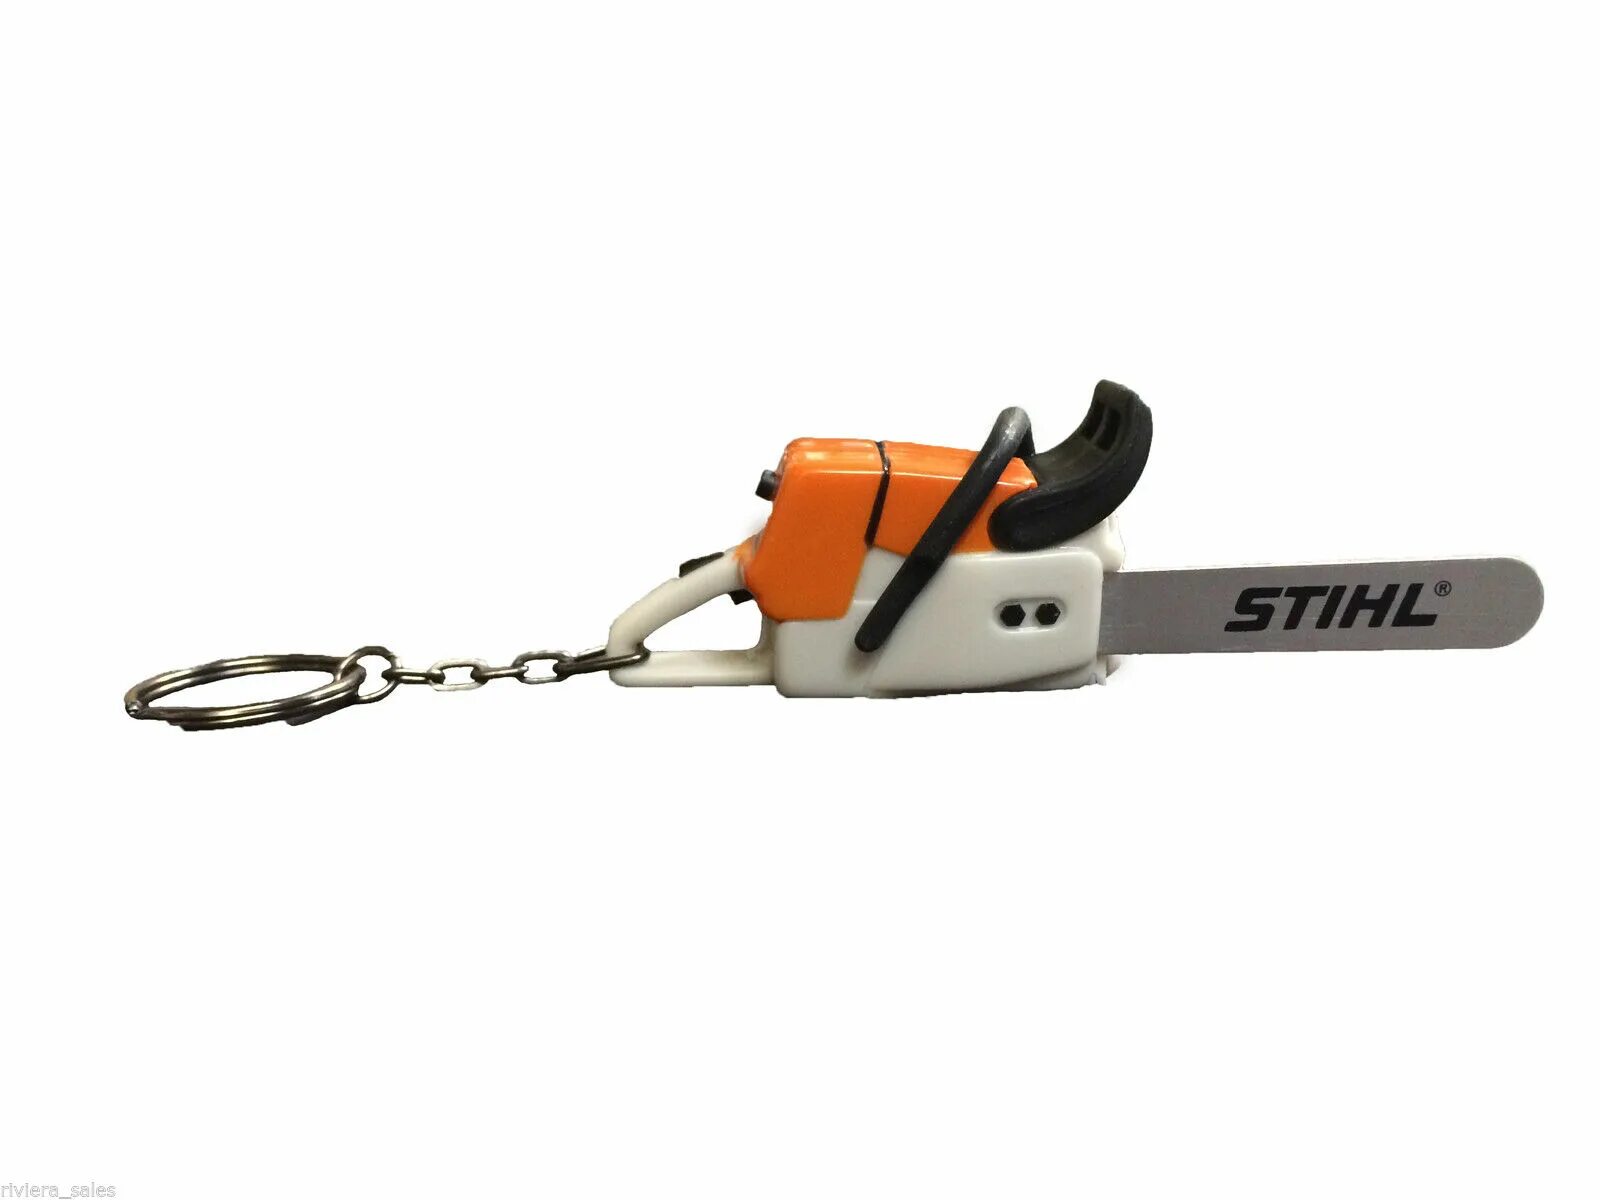 Фирменные ключи для бензопилы Stihl. Stihl фонарик мини Stihl. Мини бензопила штиль 25 см. Ключ для пилы штиль.